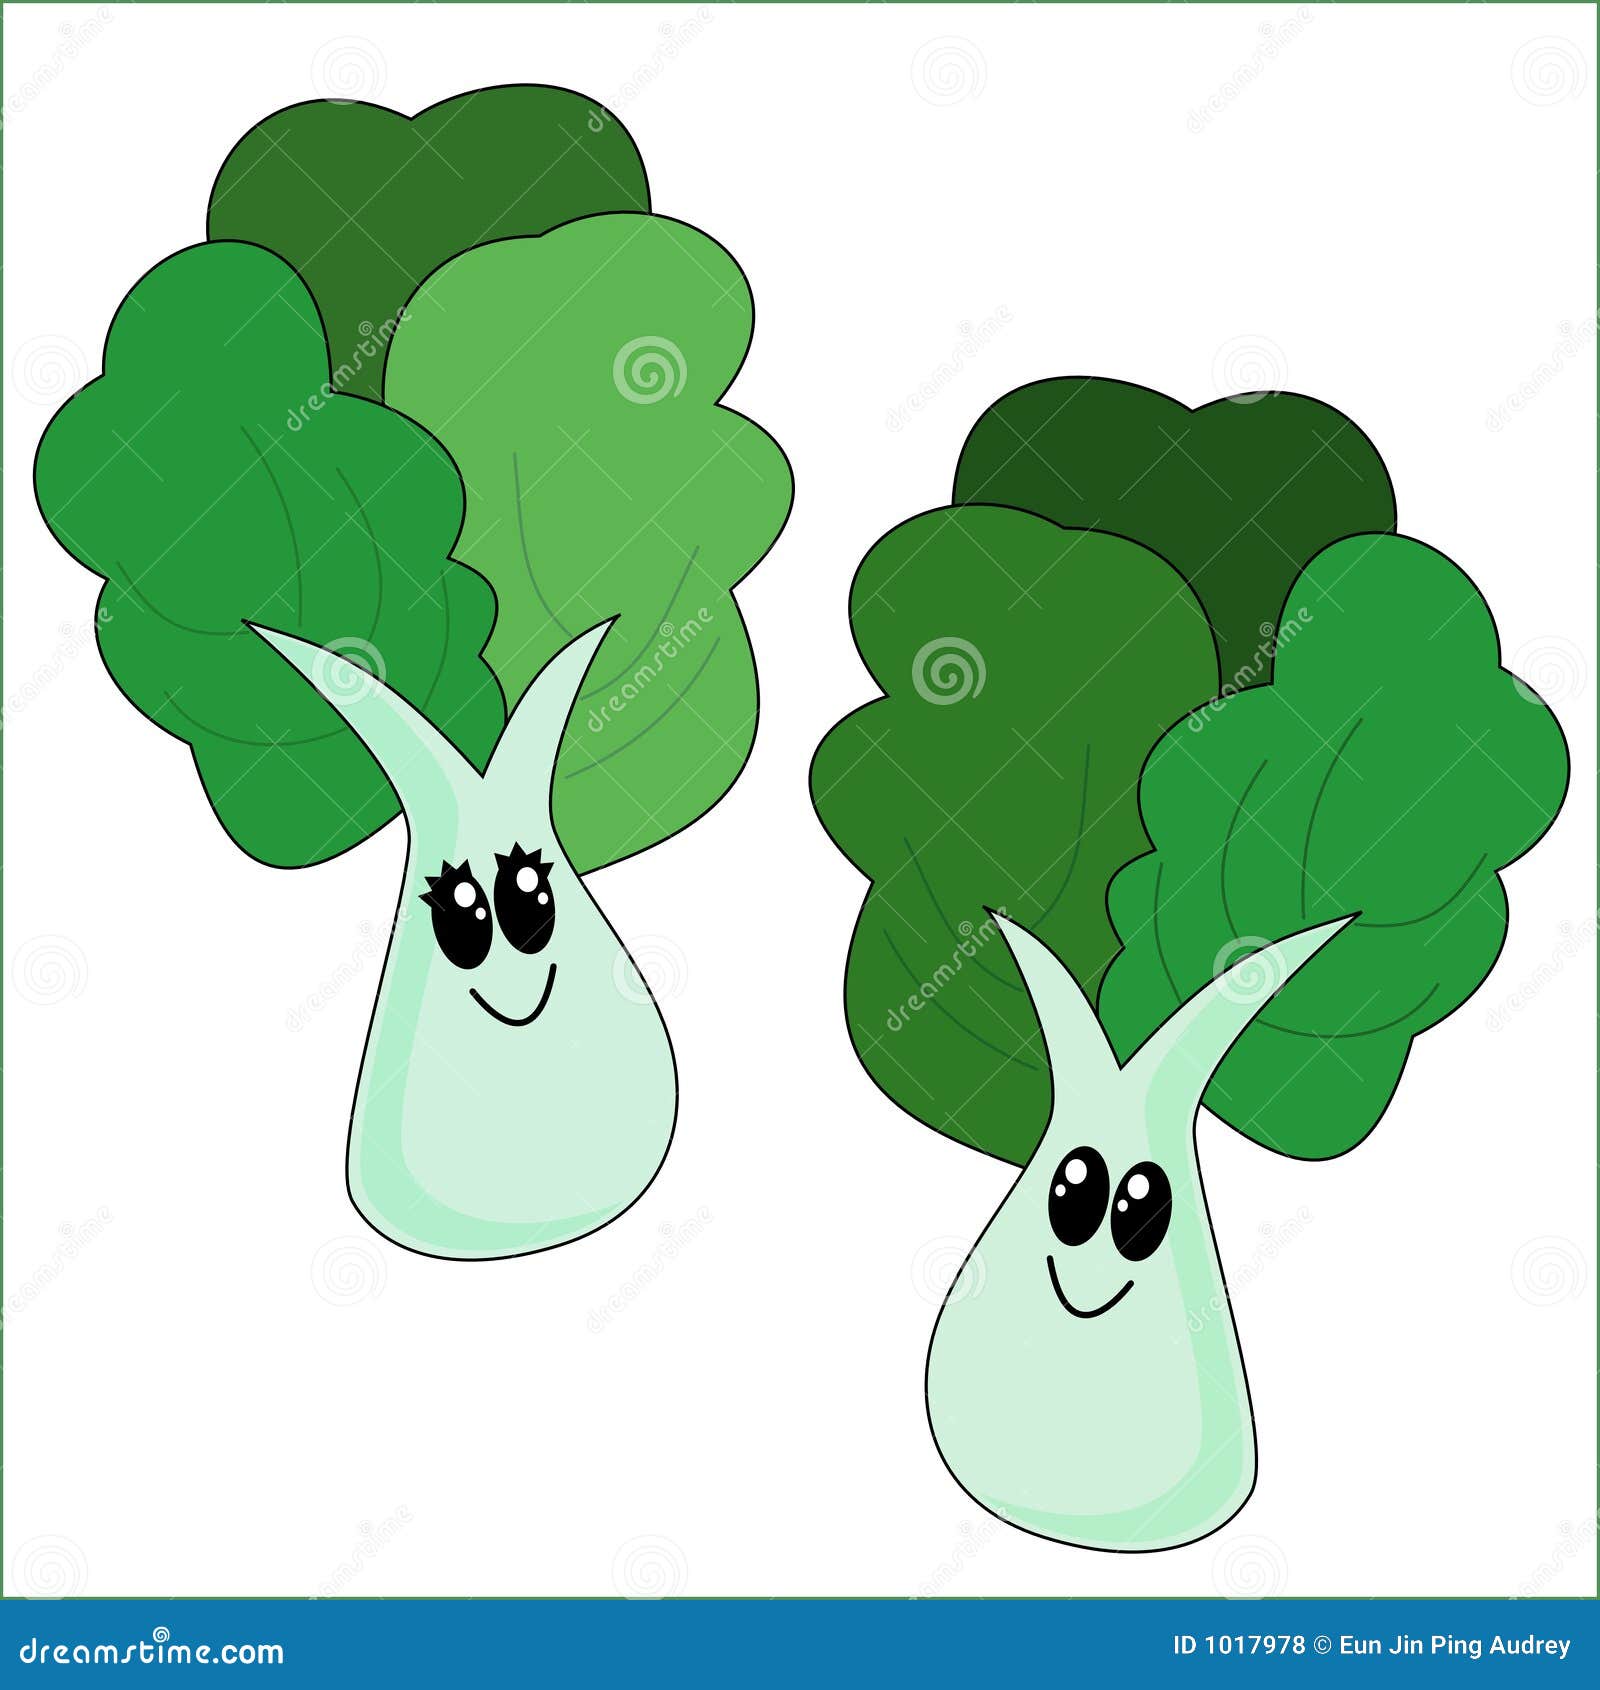 cartoon clipart of vegetables - photo #47